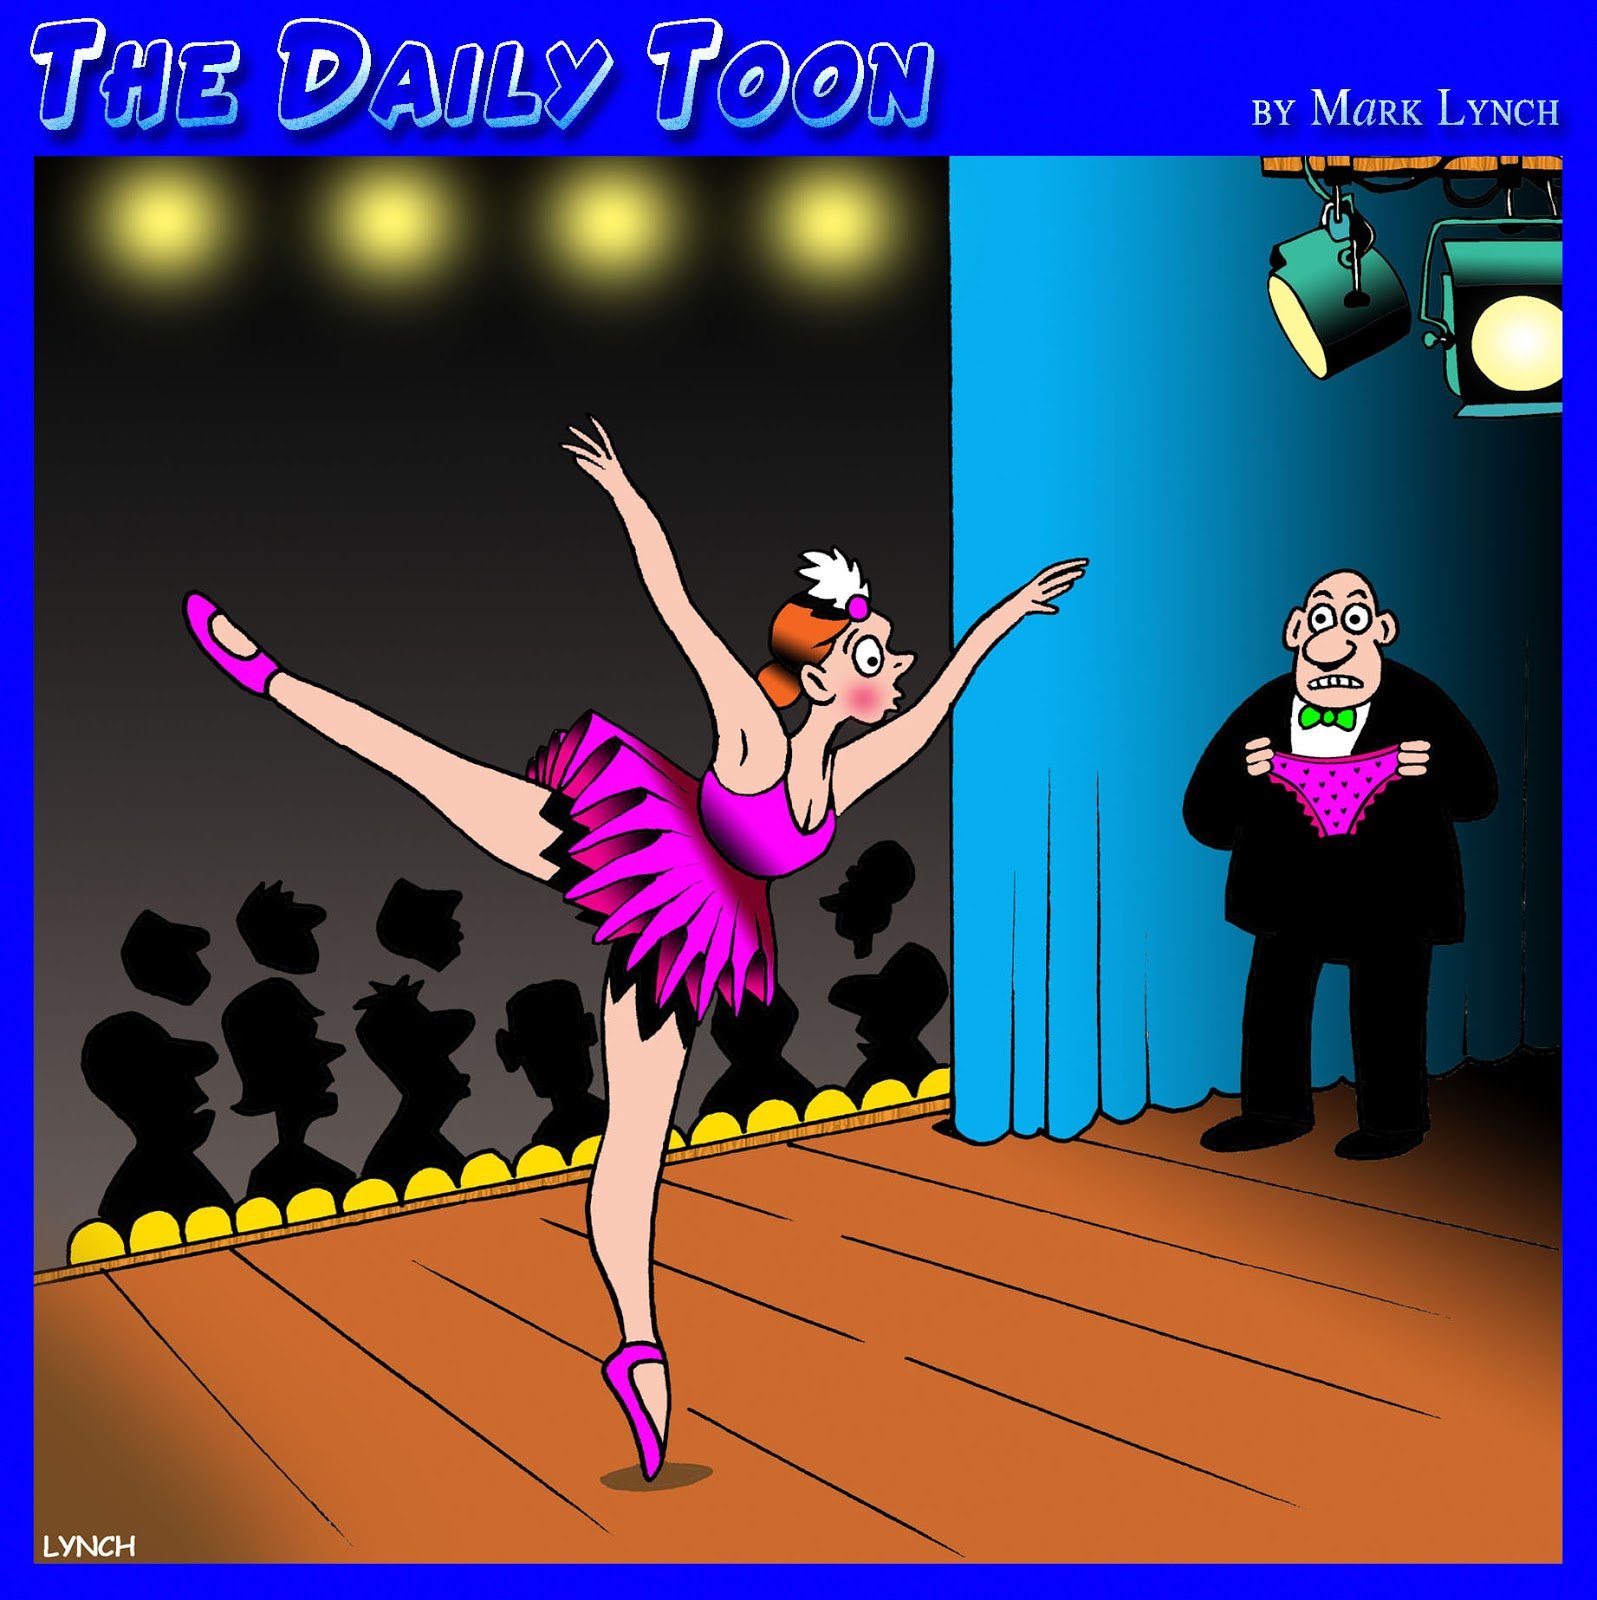 The Dancer Cartoon by Mark Lynch, from Sydney, Australia. 